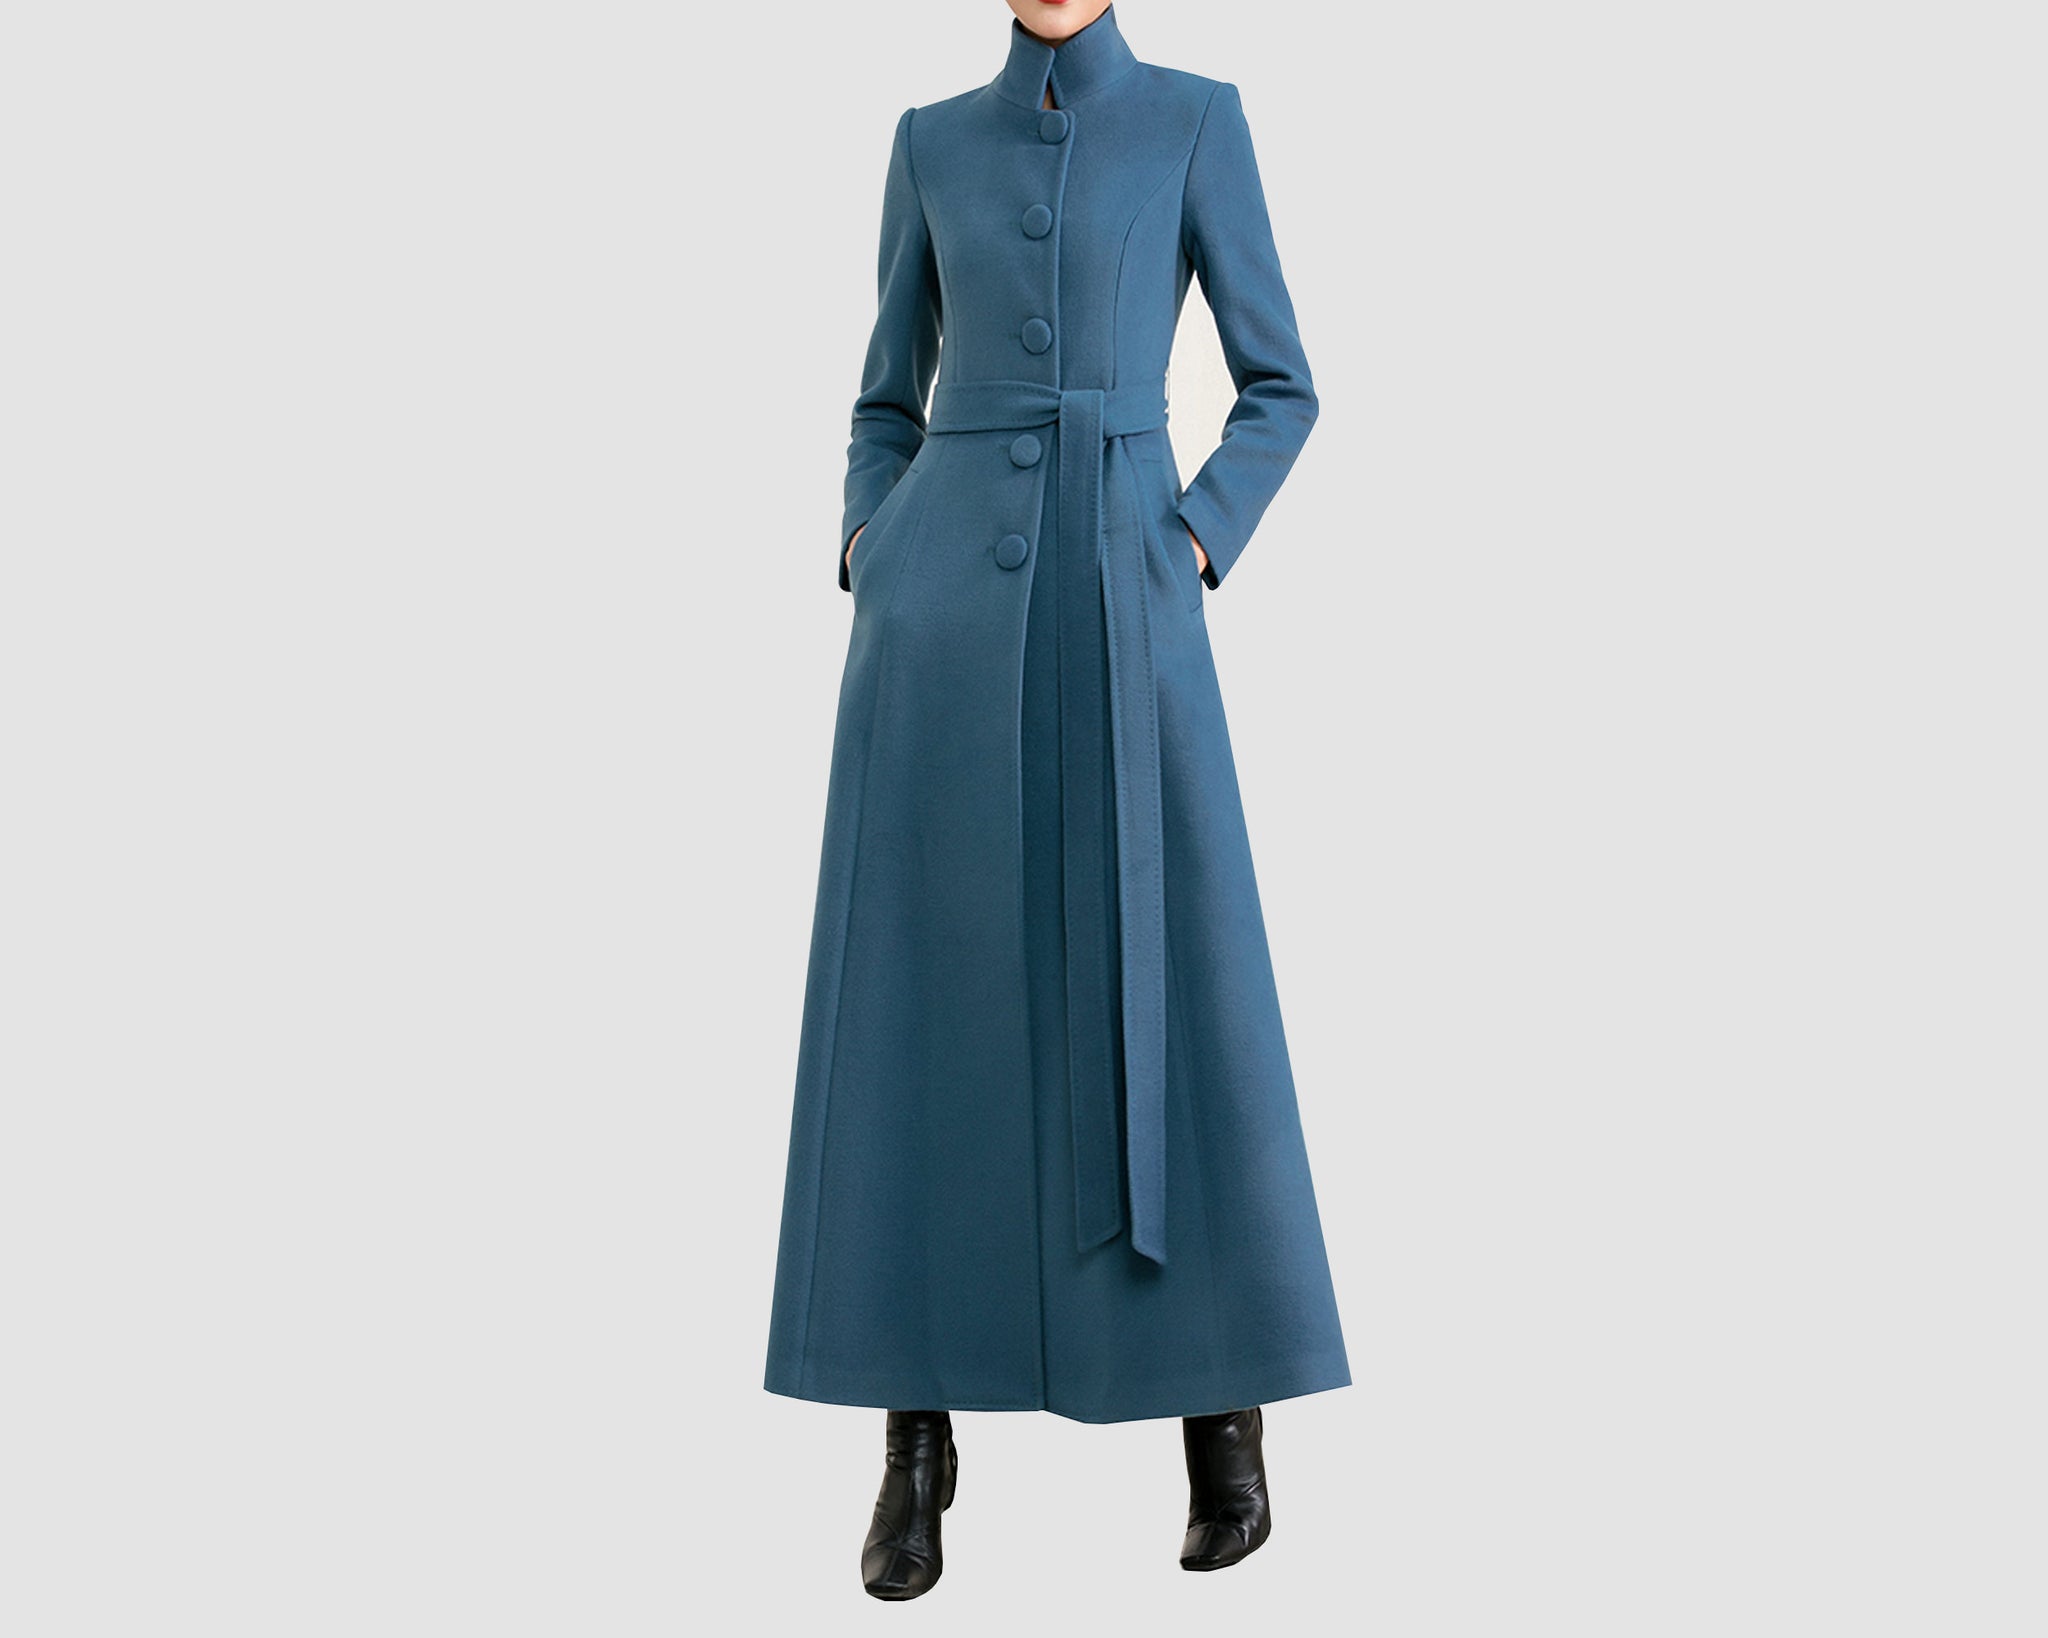 LILYSILK Cashmere Coat Navy Blue Wool Cashmere Luxurious Lapel Collar Winter Coats S